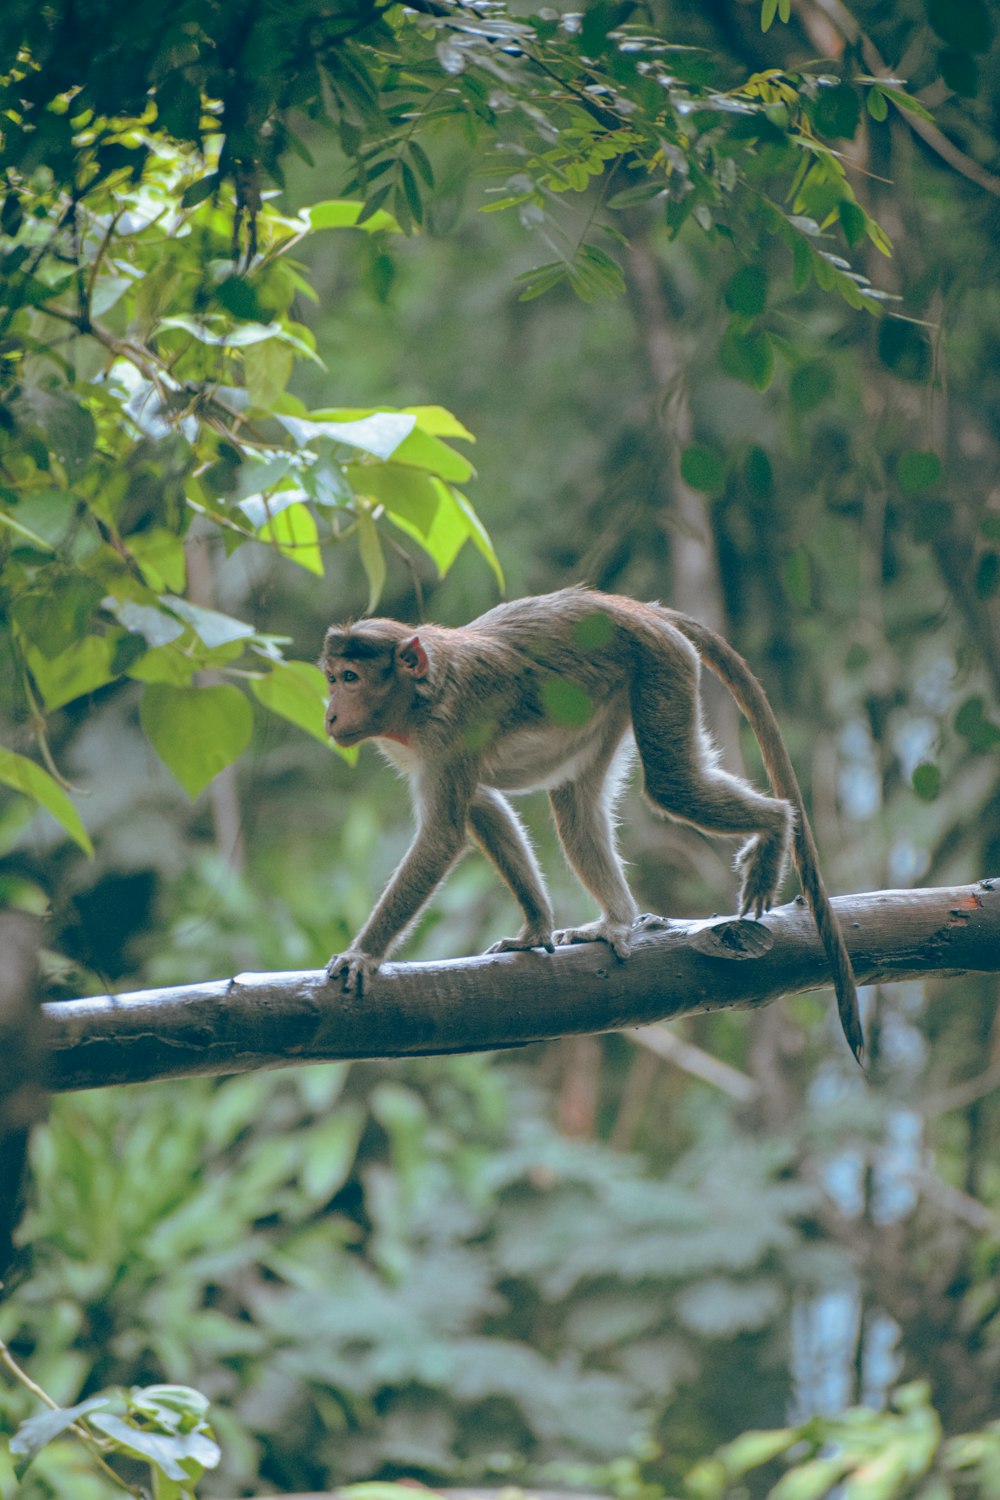 a monkey on a branch